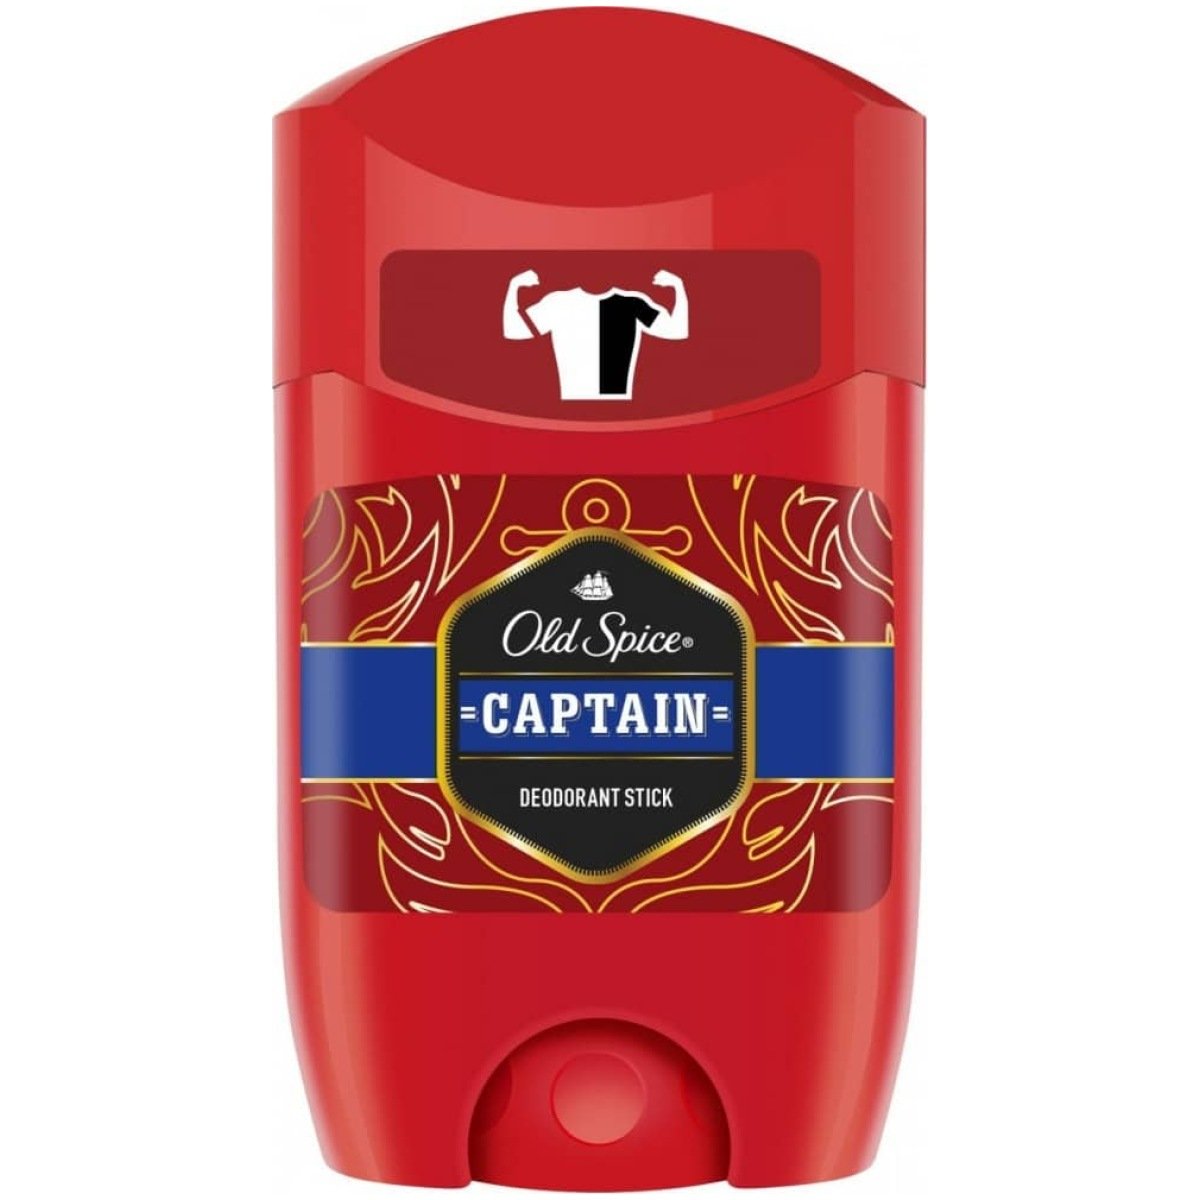 Old Spice Long Lasting Captain Deodorant Stick 50g